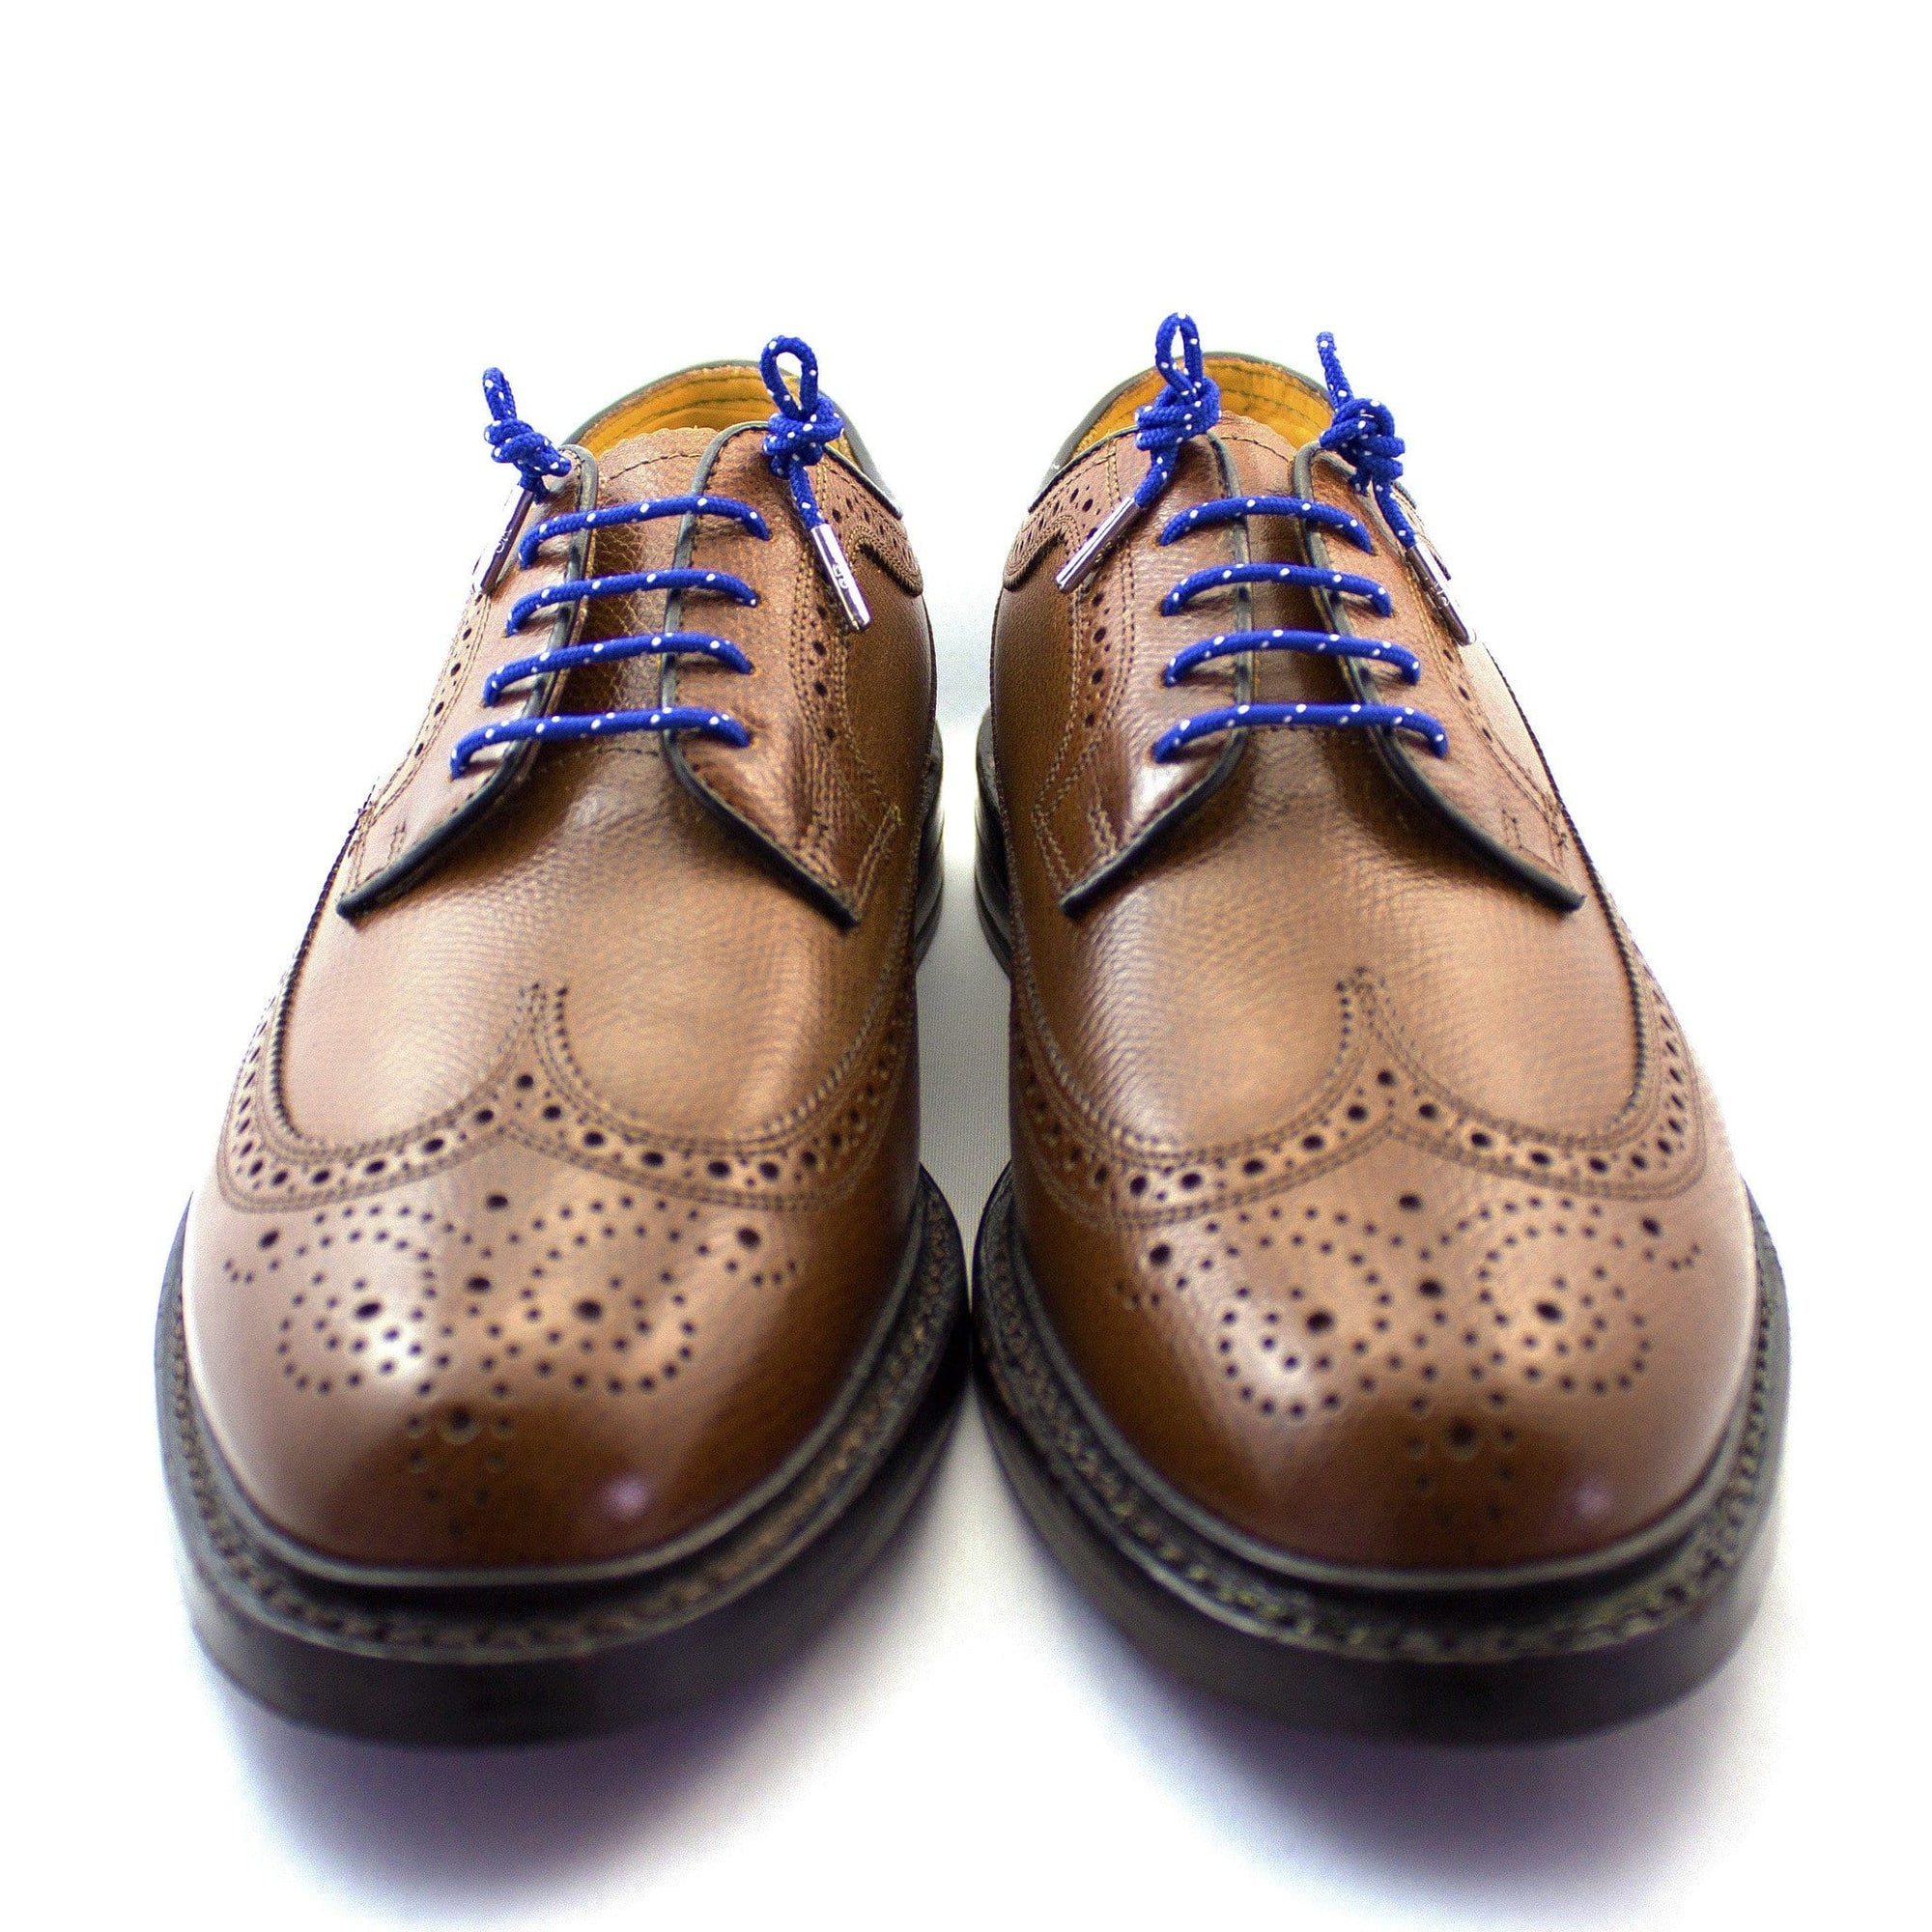 Royal blue and white dots laces for dress shoes, Length: 32"/81cm-Stolen Riches